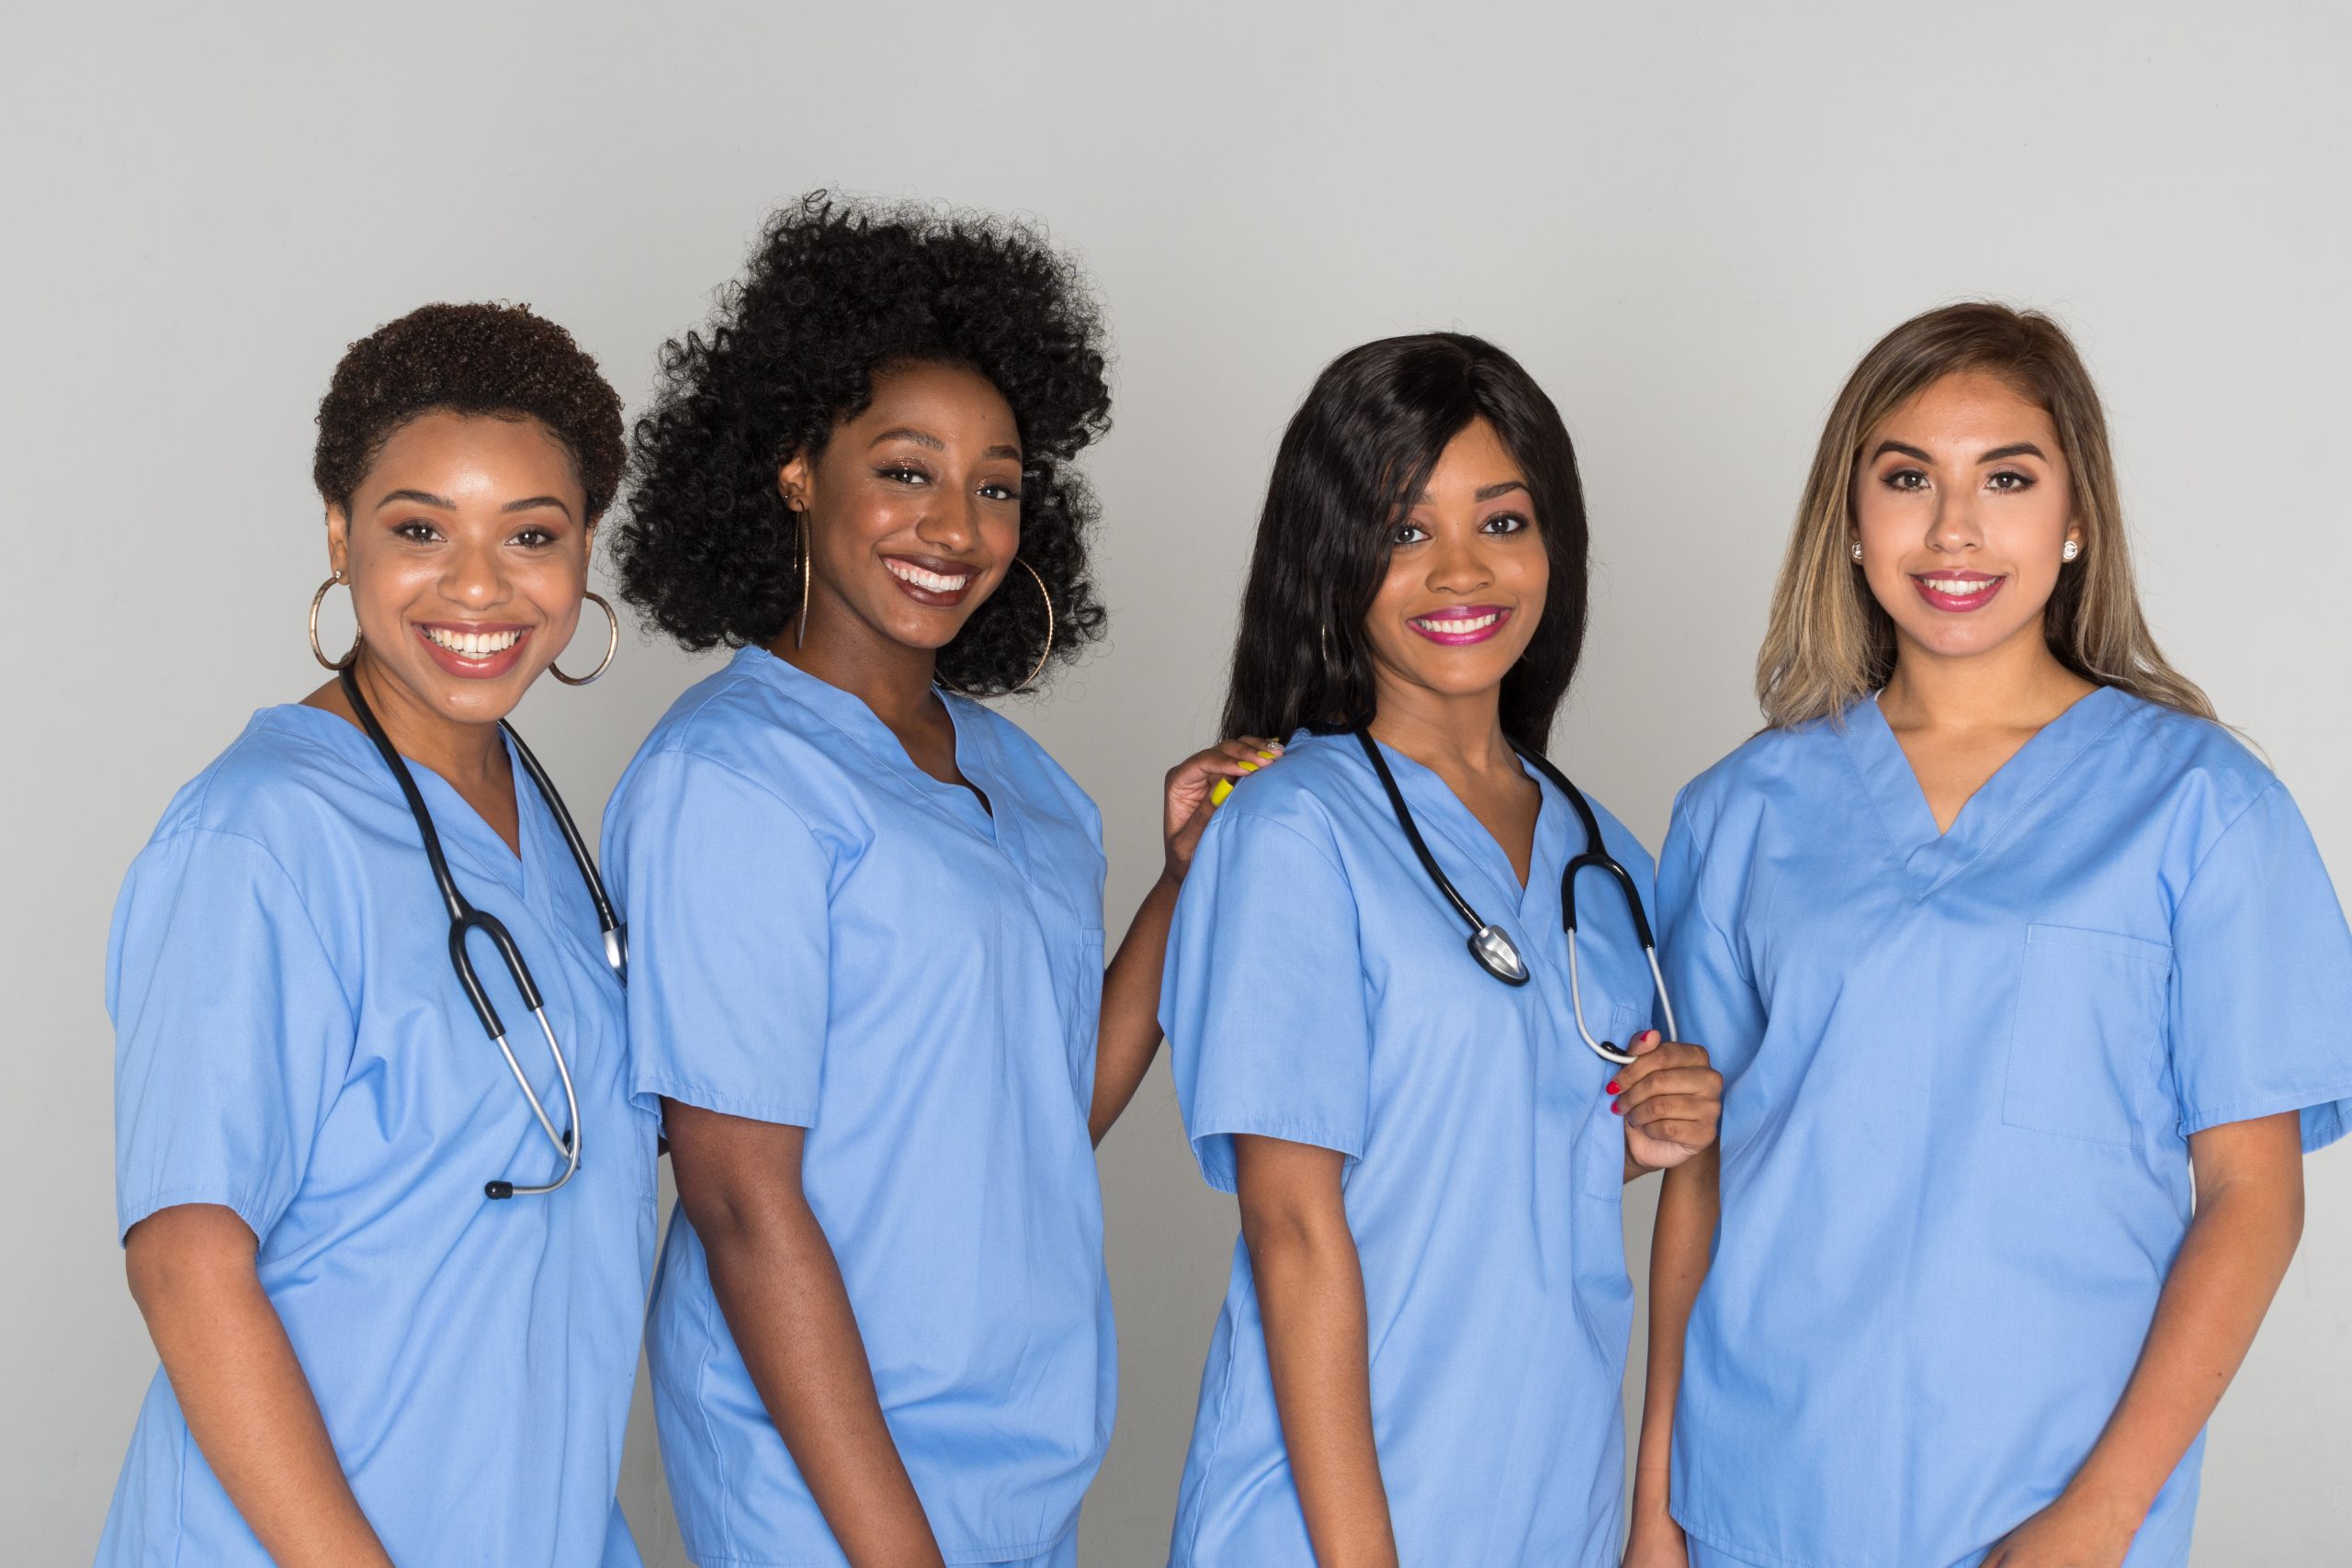 Group Of Nurses